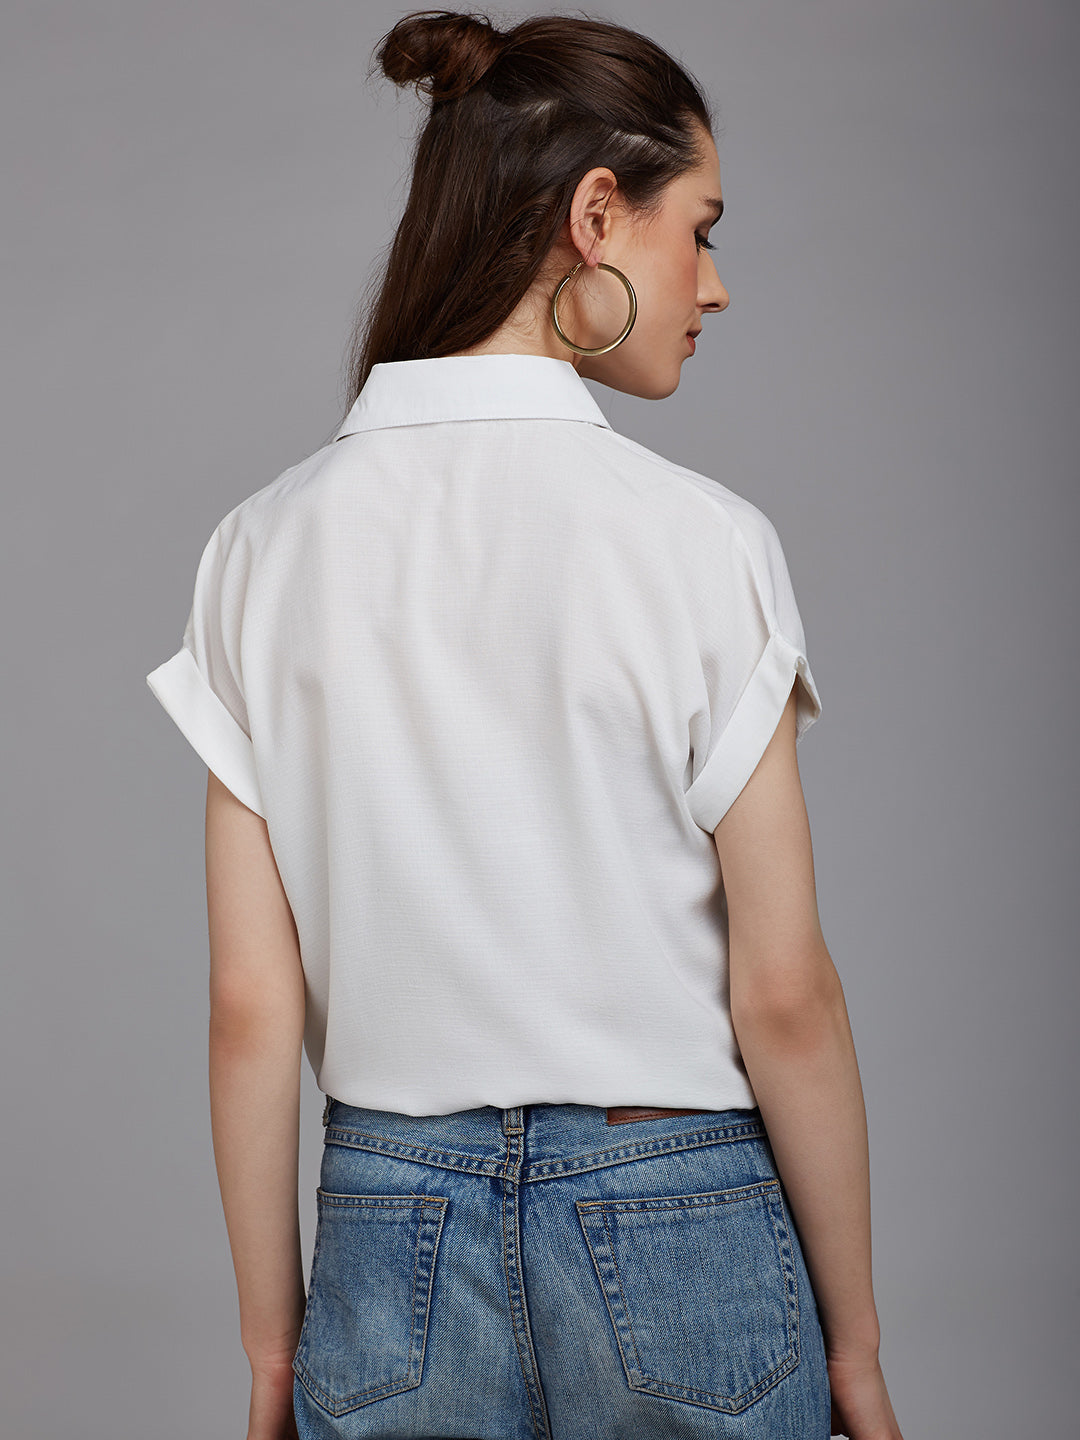 Berrylush White Regular Fit Printed Casual Shirt - Berrylush